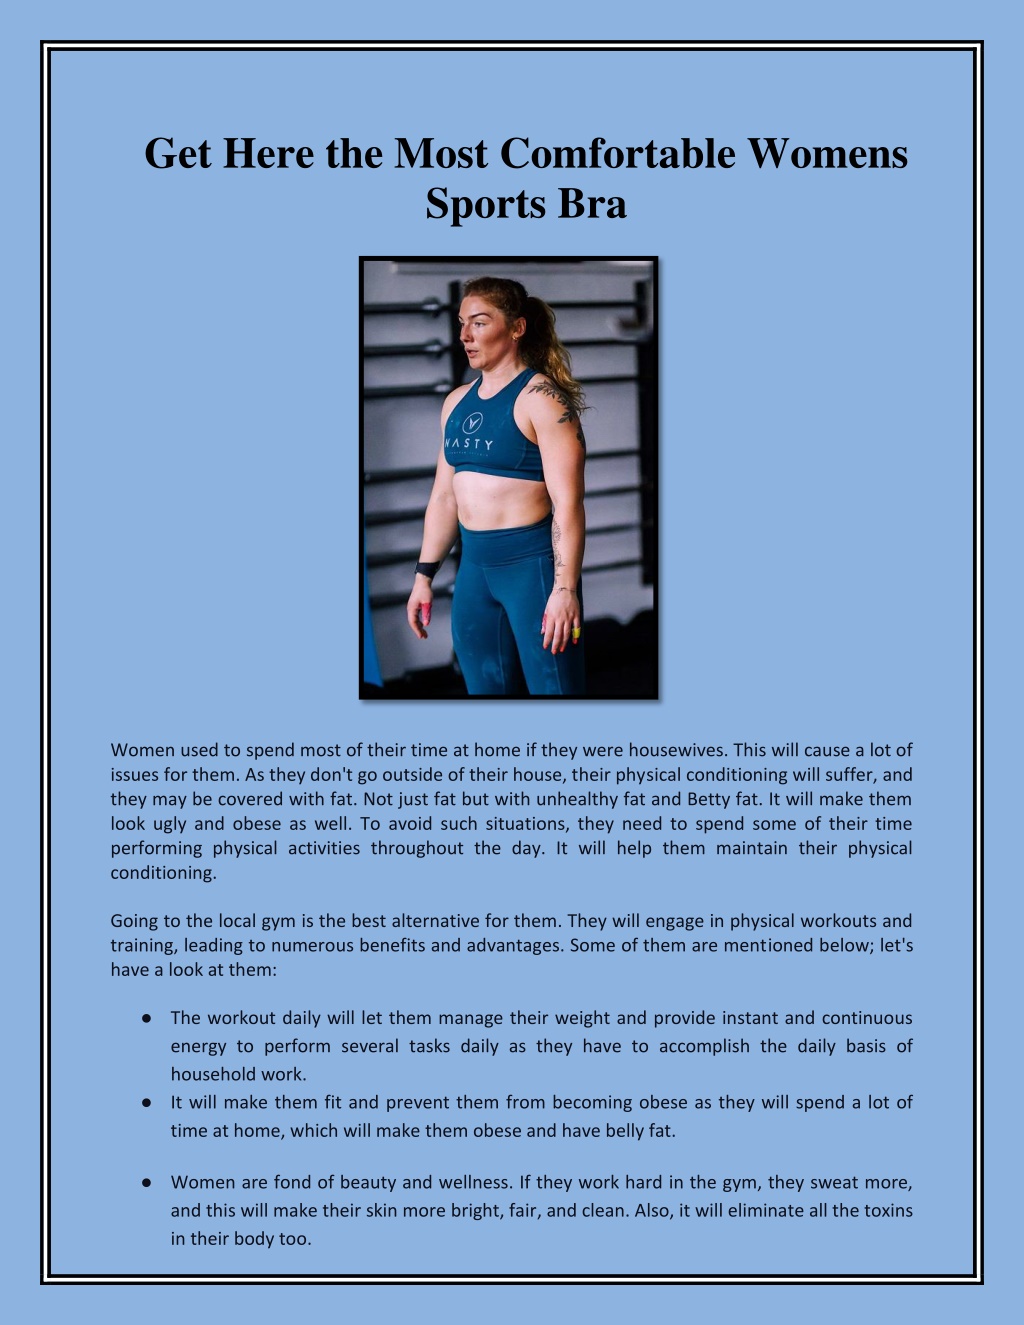 https://image6.slideserve.com/11327284/get-here-the-most-comfortable-womens-sports-bra-l.jpg